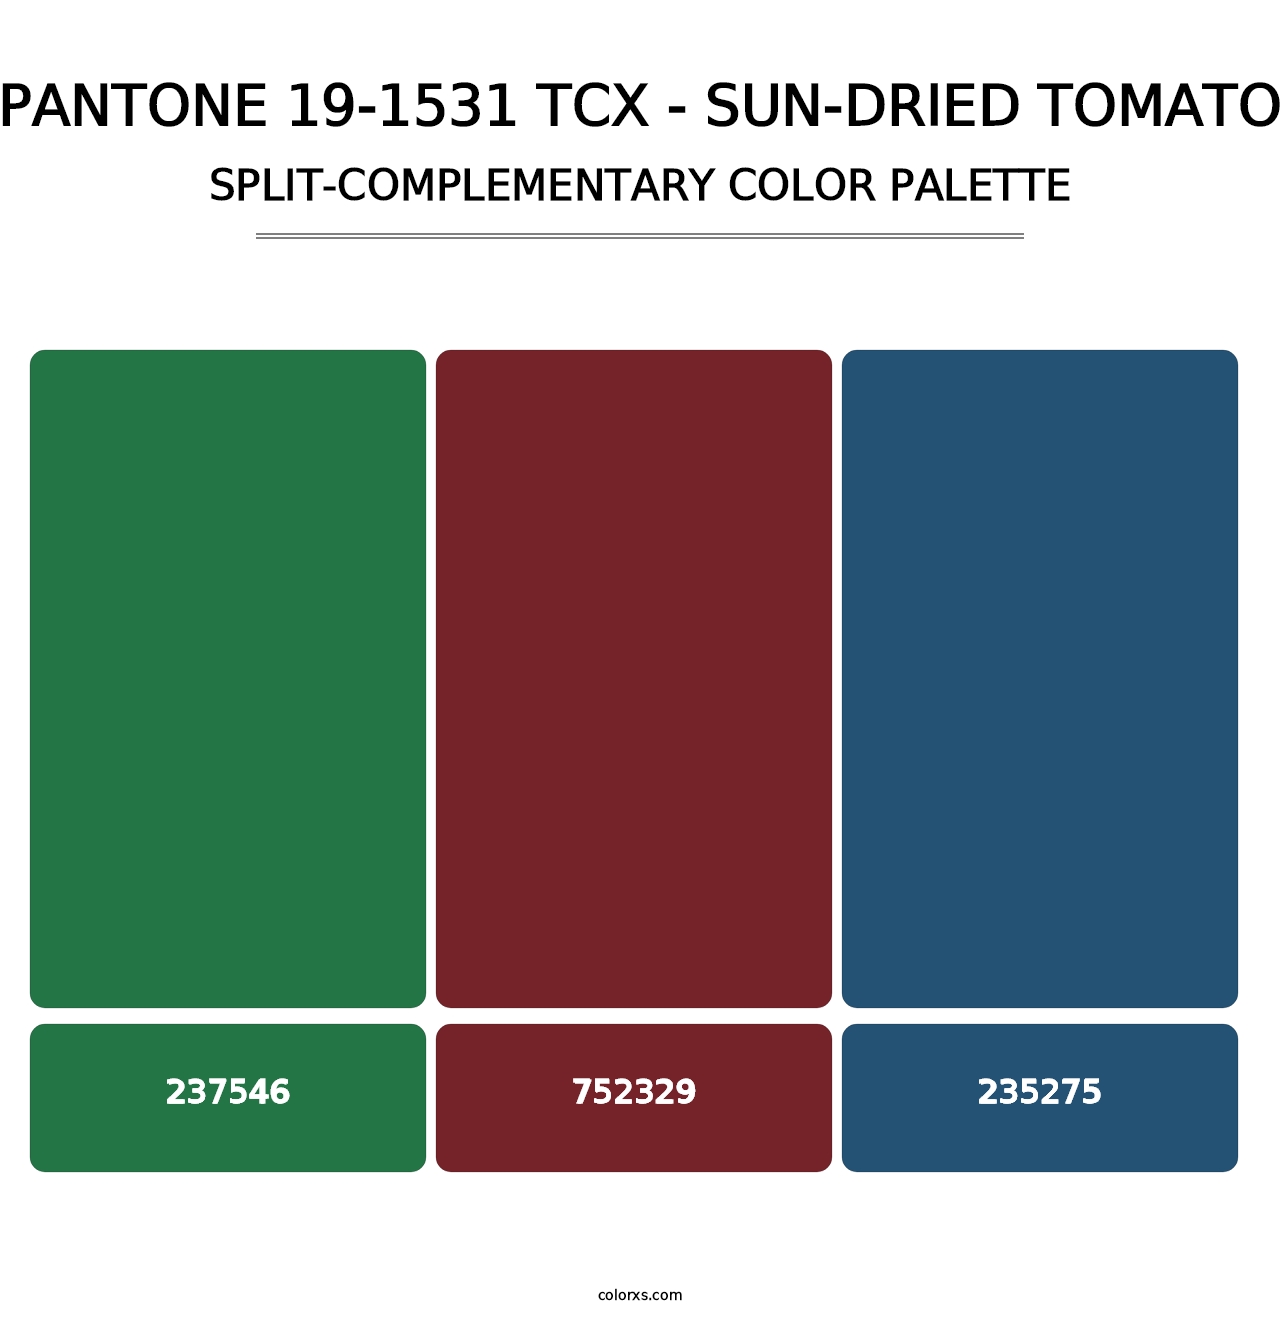 PANTONE 19-1531 TCX - Sun-Dried Tomato - Split-Complementary Color Palette